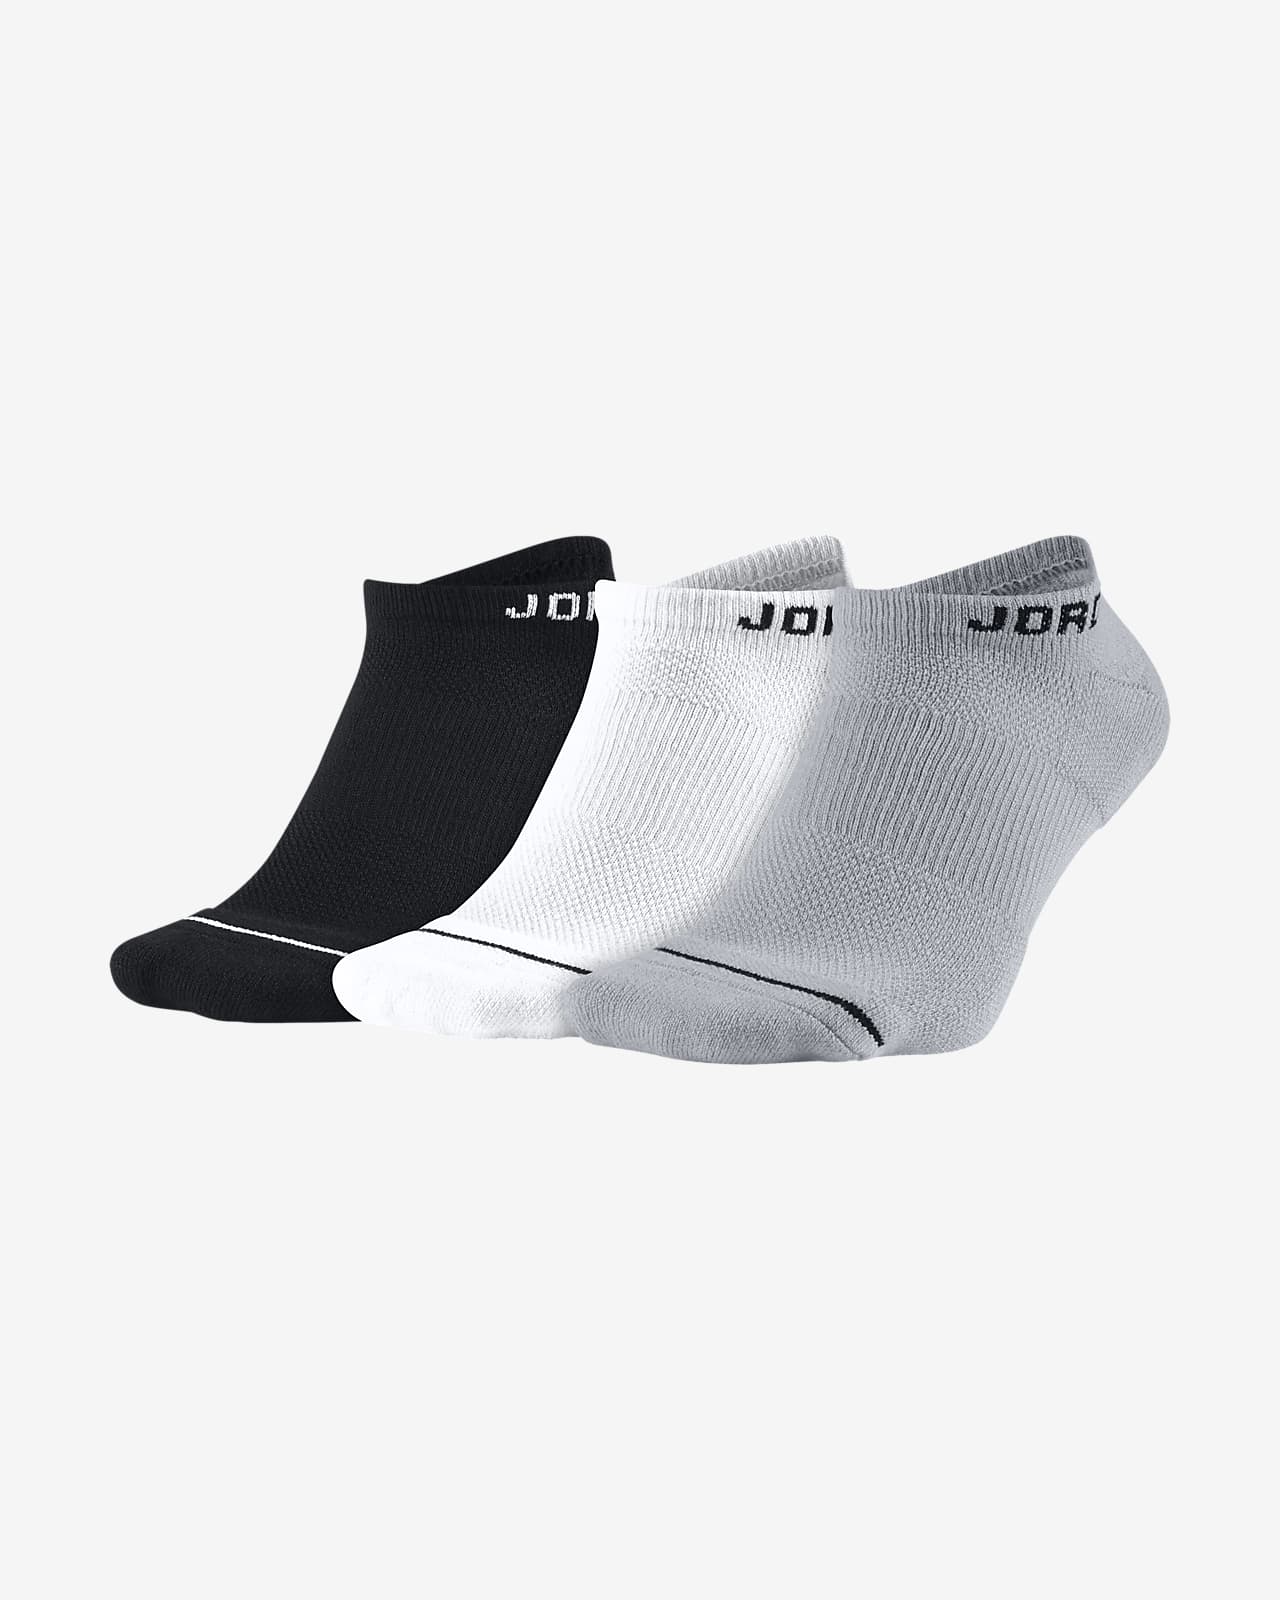 jordans that look like socks